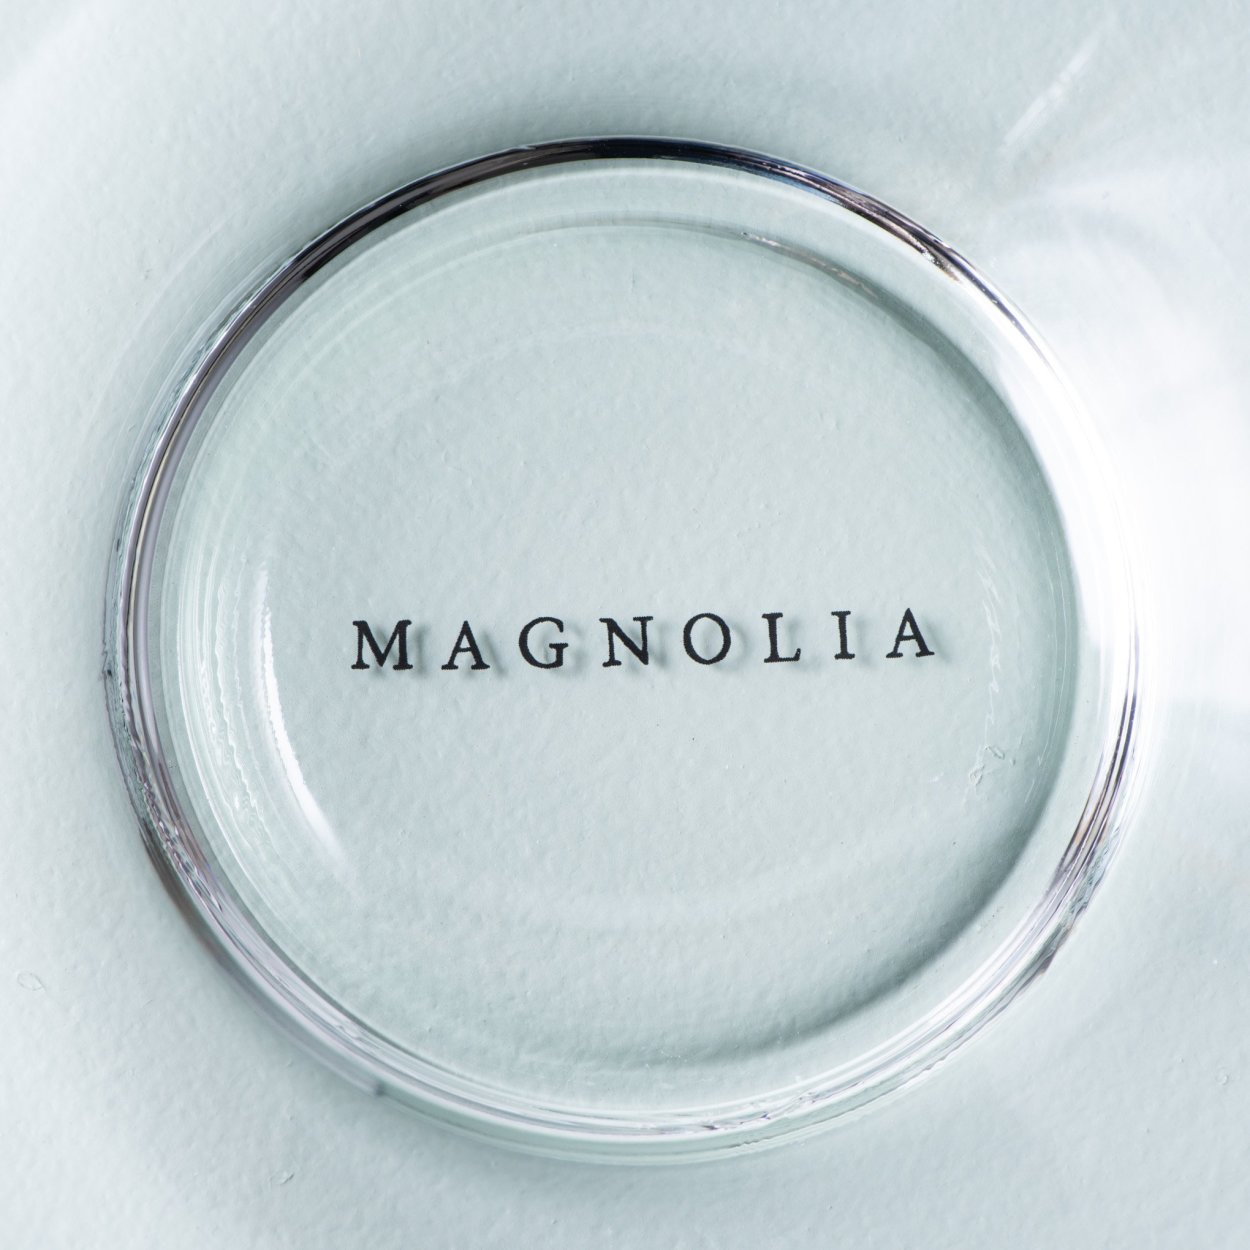 https://magnolia.com/images/res.cloudinary.com/social-upload-prod-media-cld/image/upload/w_1250/shopify/1/0207/8508/products/19002-050MG_3.jpg?v=1601059626